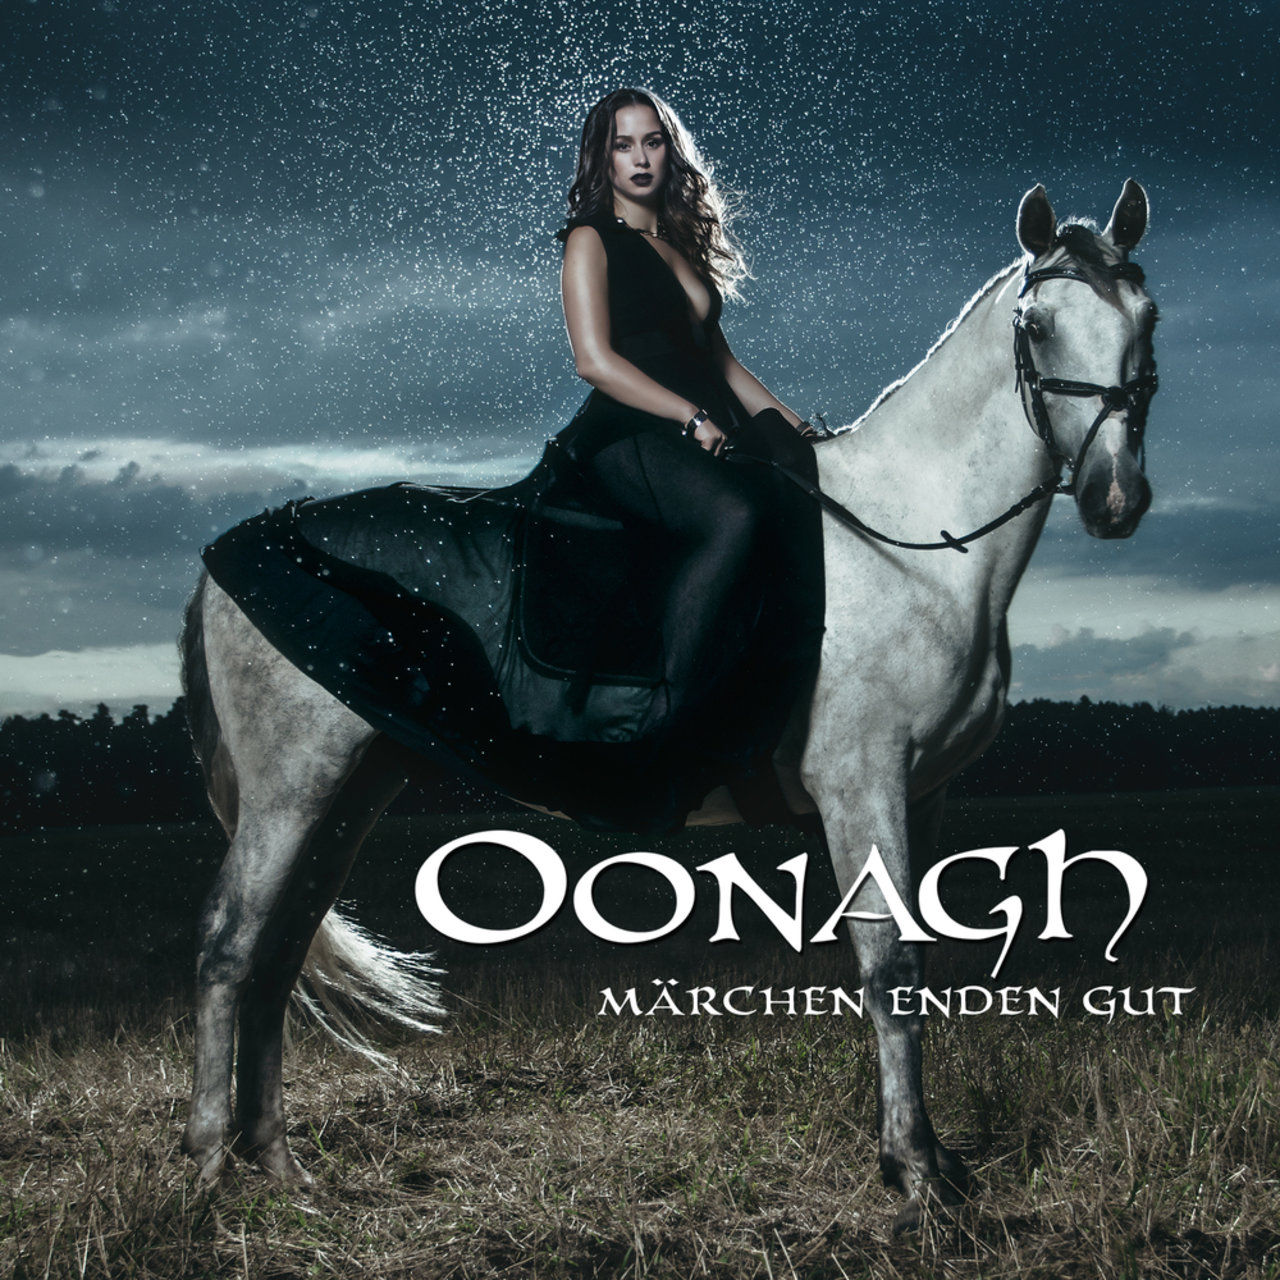 Oonagh Märchen enden gut cover artwork